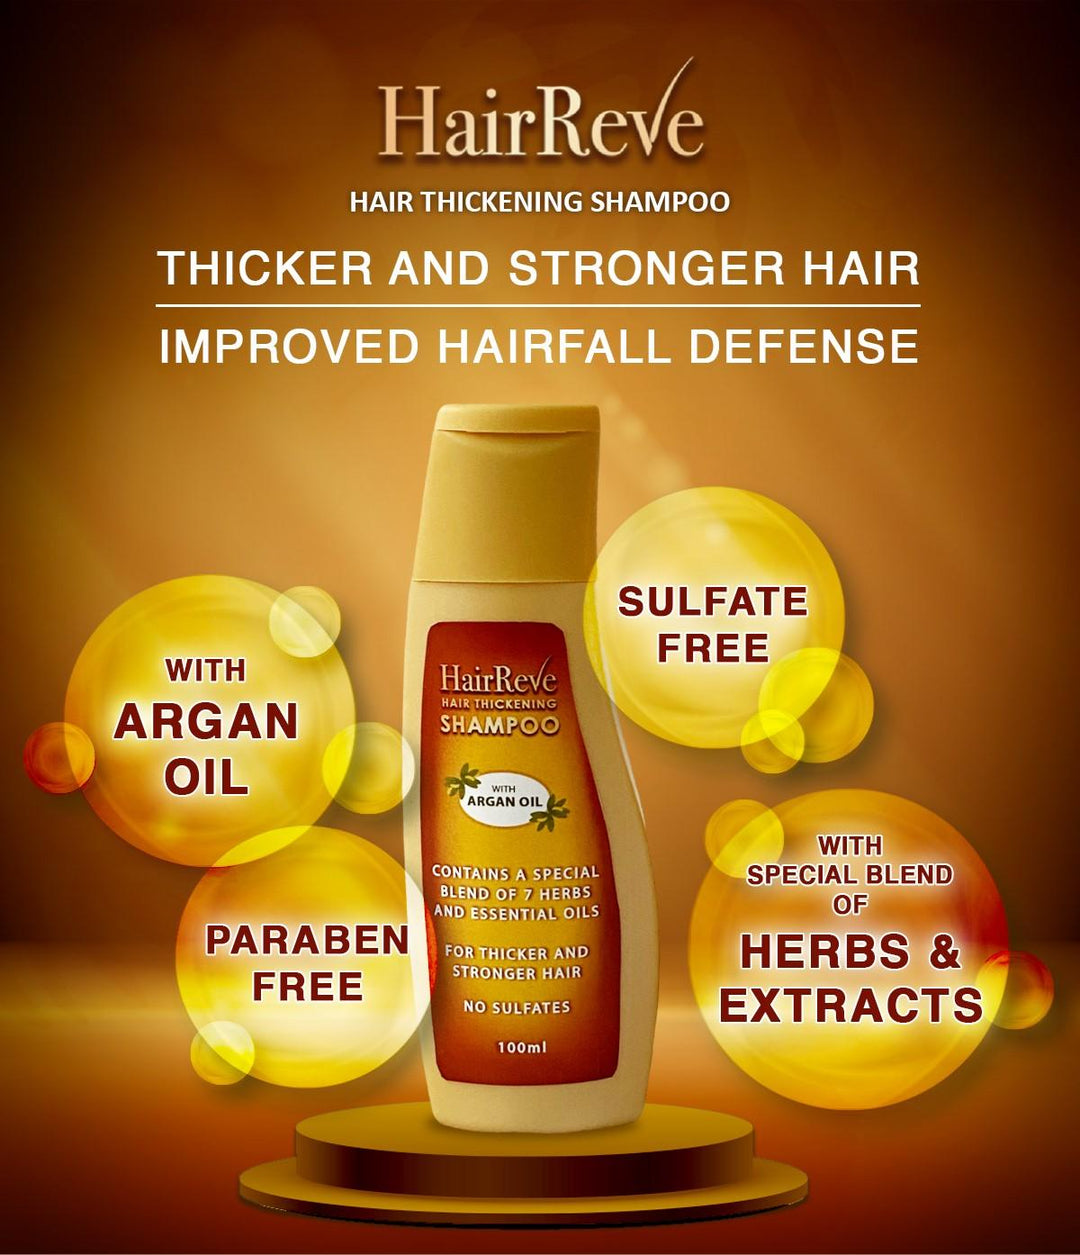 Hairreve Hair Thickening Serum & Sulfate-Free Shampoo Bundle 100ml each - HairReve